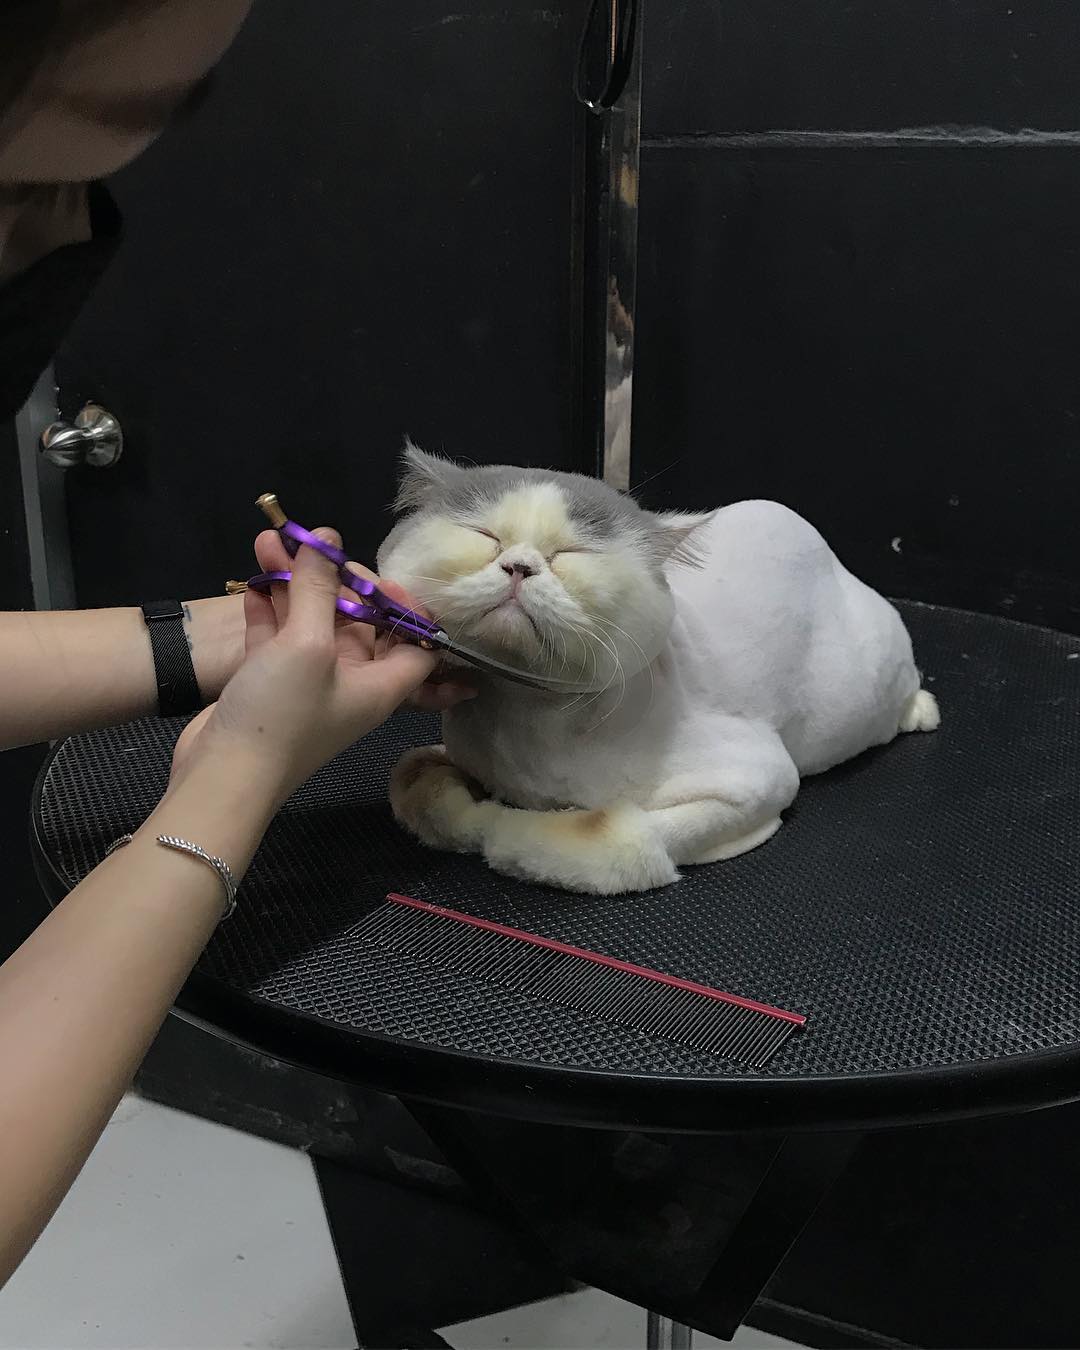 Pet grooming in Singapore - My Pet Image